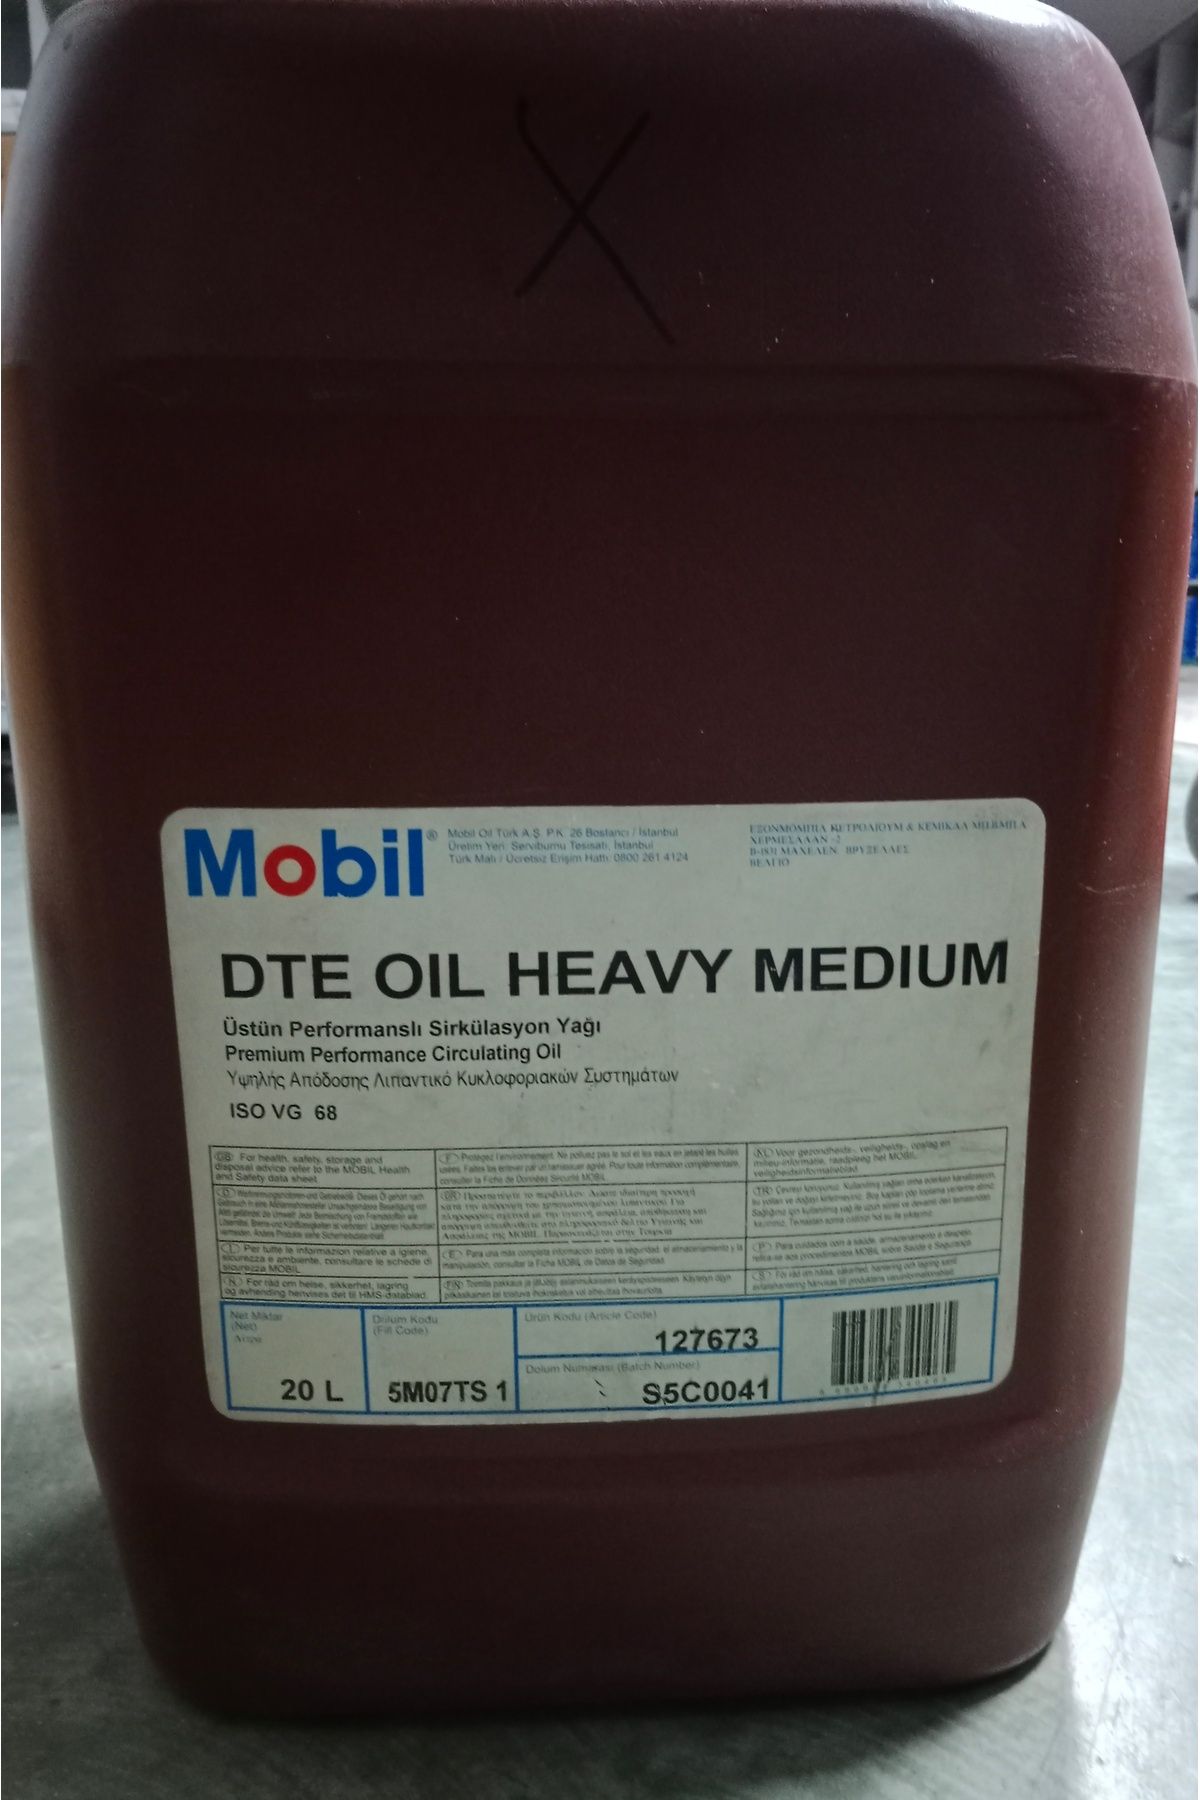 Mobil Dte Oil Heavy Medium (20L) Bidon